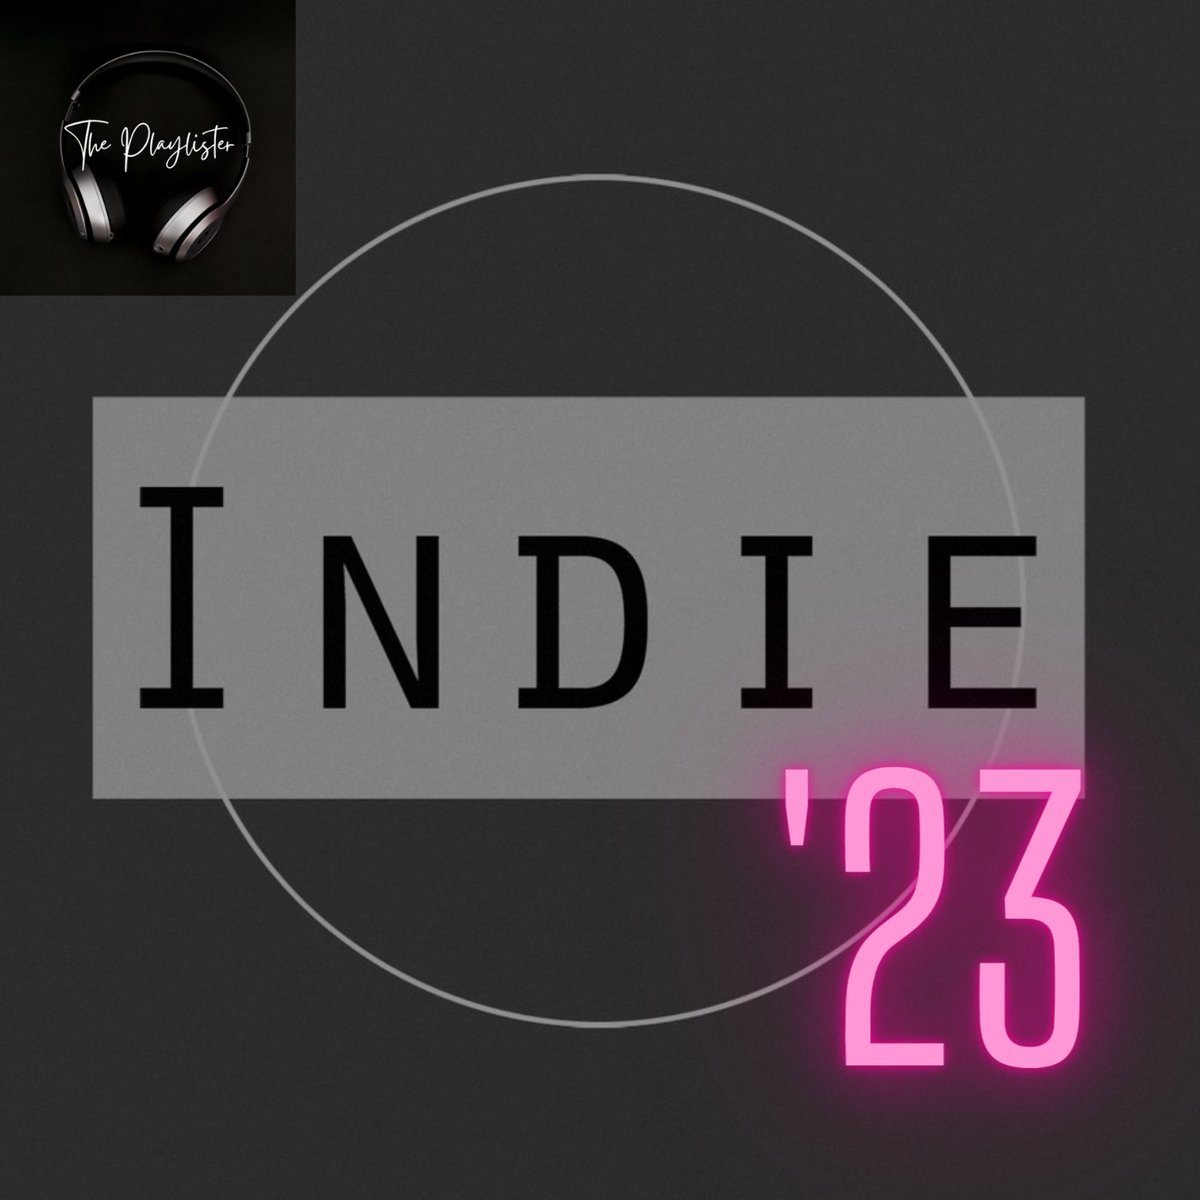 📢 Our Indie '23 Spotify Playlist update...
 Added: @DeadBlondeStars @TheGreatLeslie_ @DARKS0FT @newdivideuk @powderhouse20 @mr_hugh_prod 

❤️ Love it here: spoti.fi/3QBLU6U

Follow The Playlister for more musical adventures:
spoti.fi/3gCfL0V

#rtItBot #SpotifyRT